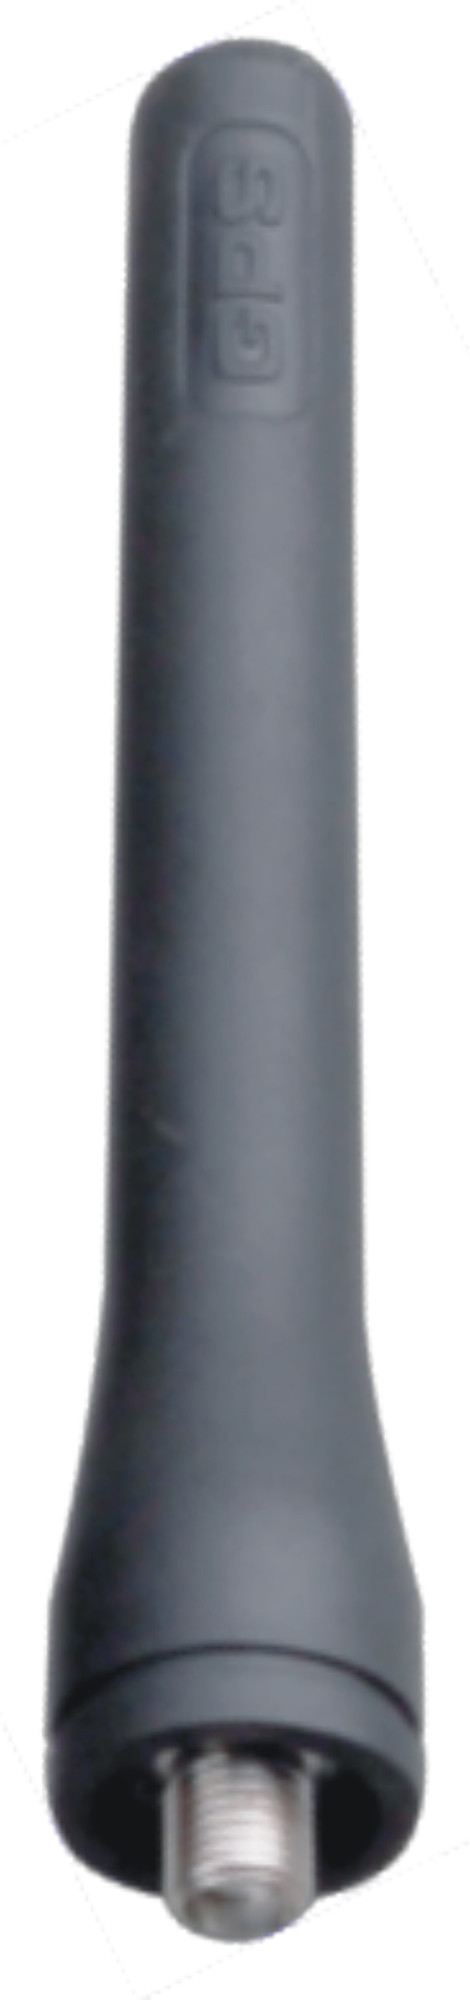 HYTERA UHF/GPS-Antenne, 9 cm, SMA-Buchse, 400 - 470 MHz AN0435H02 580002003005